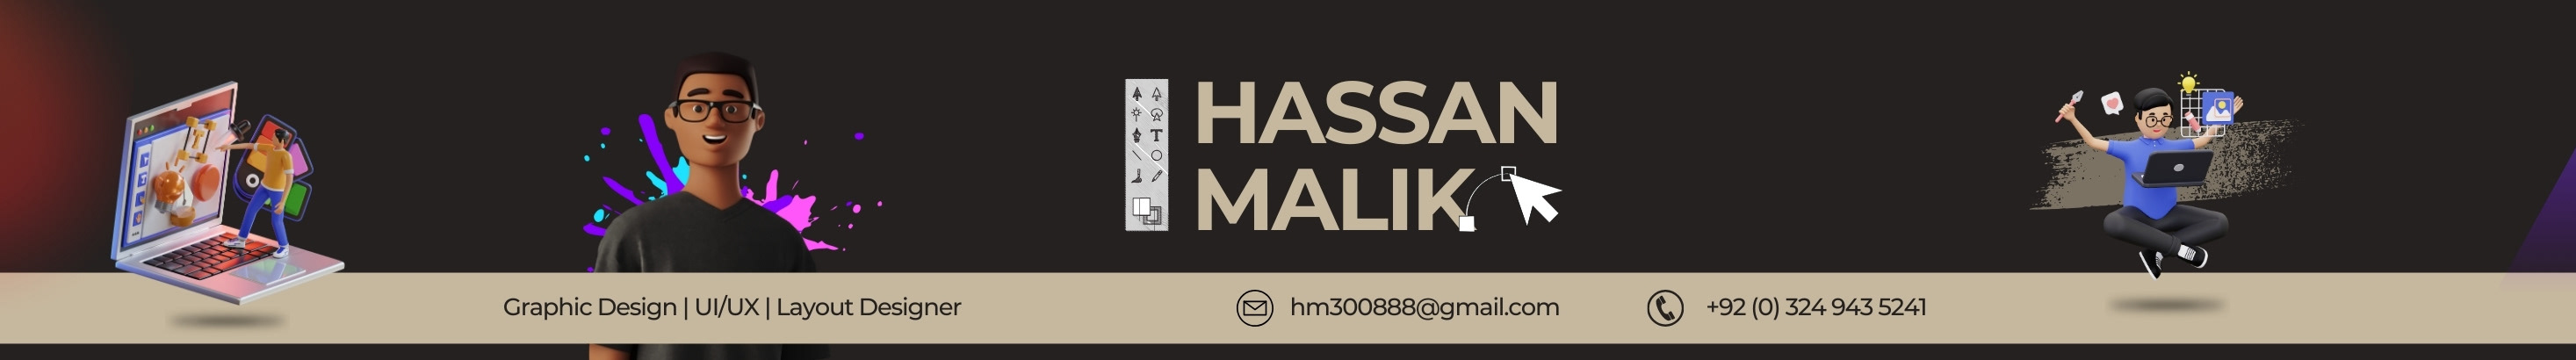 Hassan Malik profil başlığı